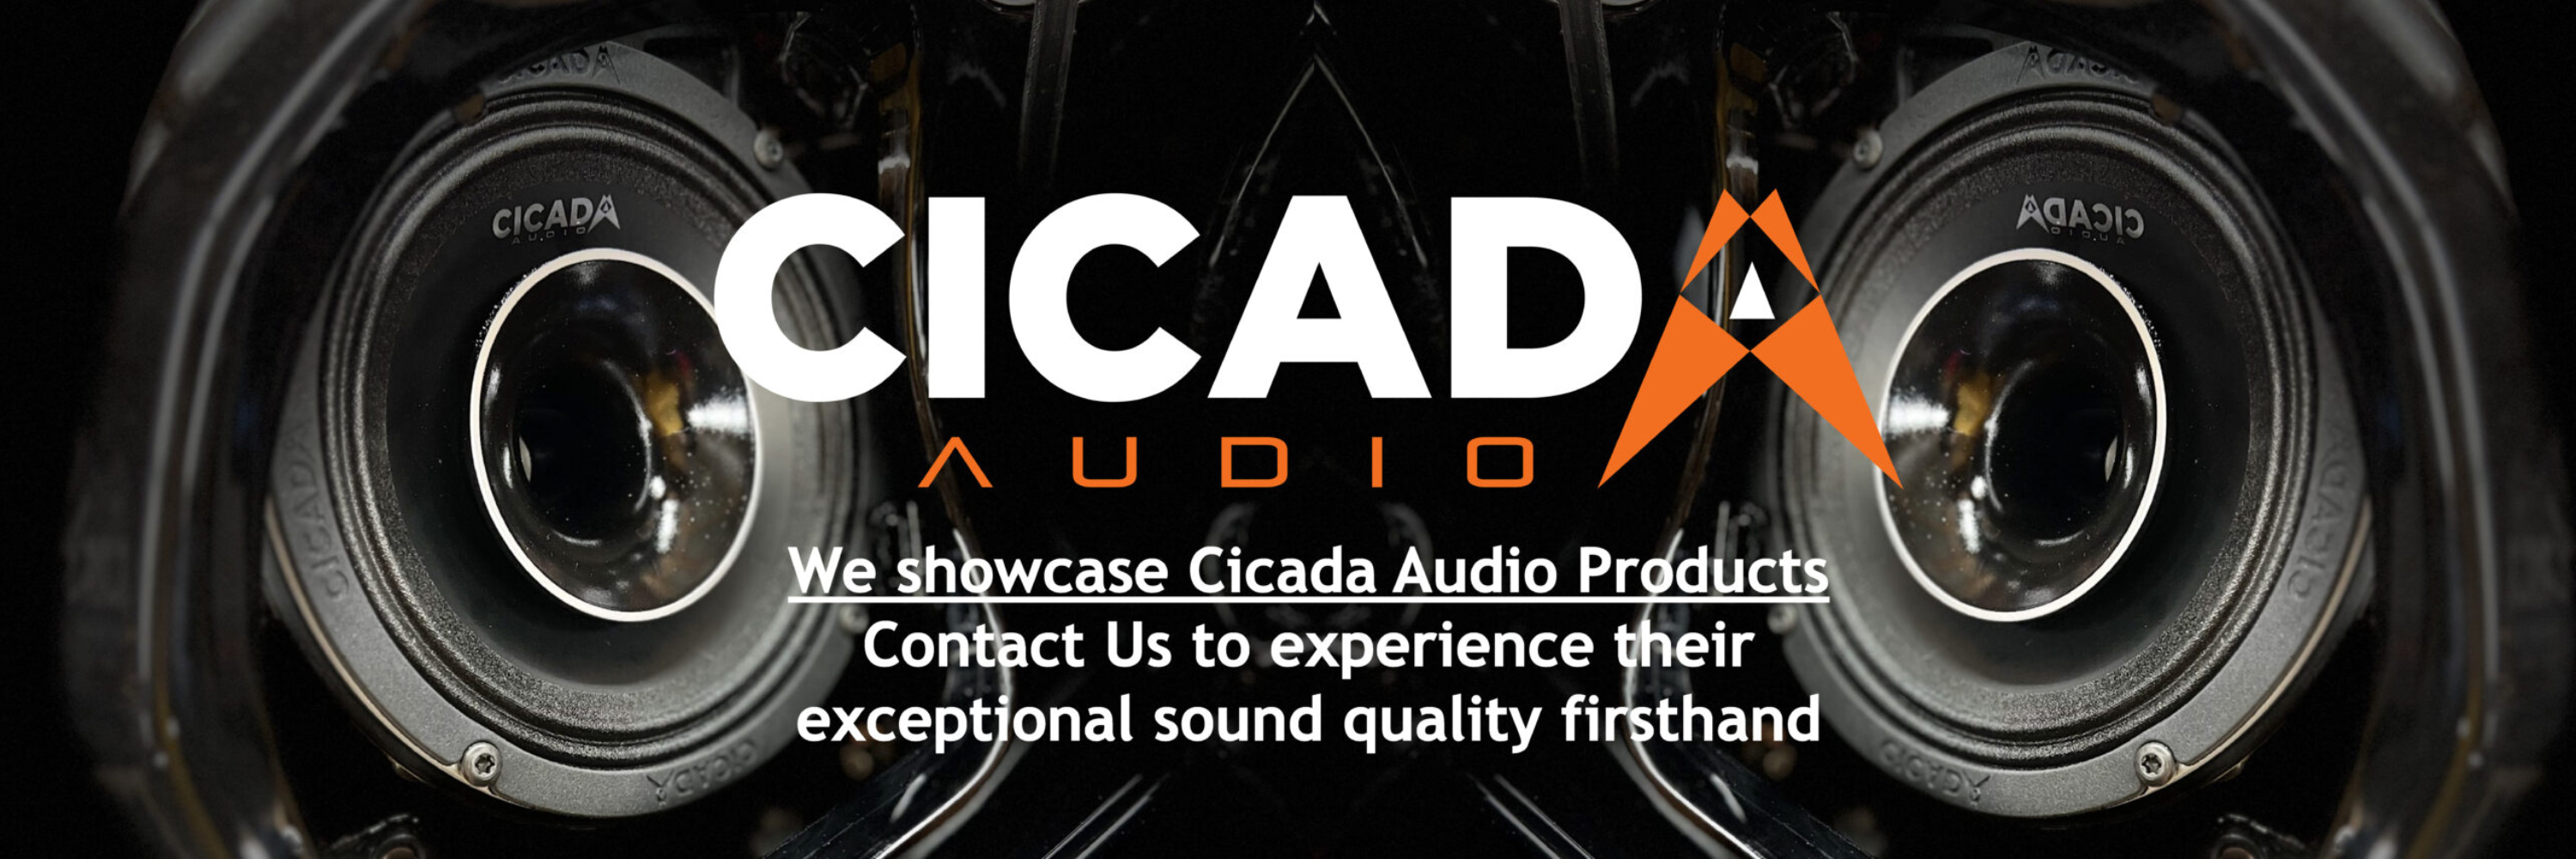 Cicada Homepage Banner-01